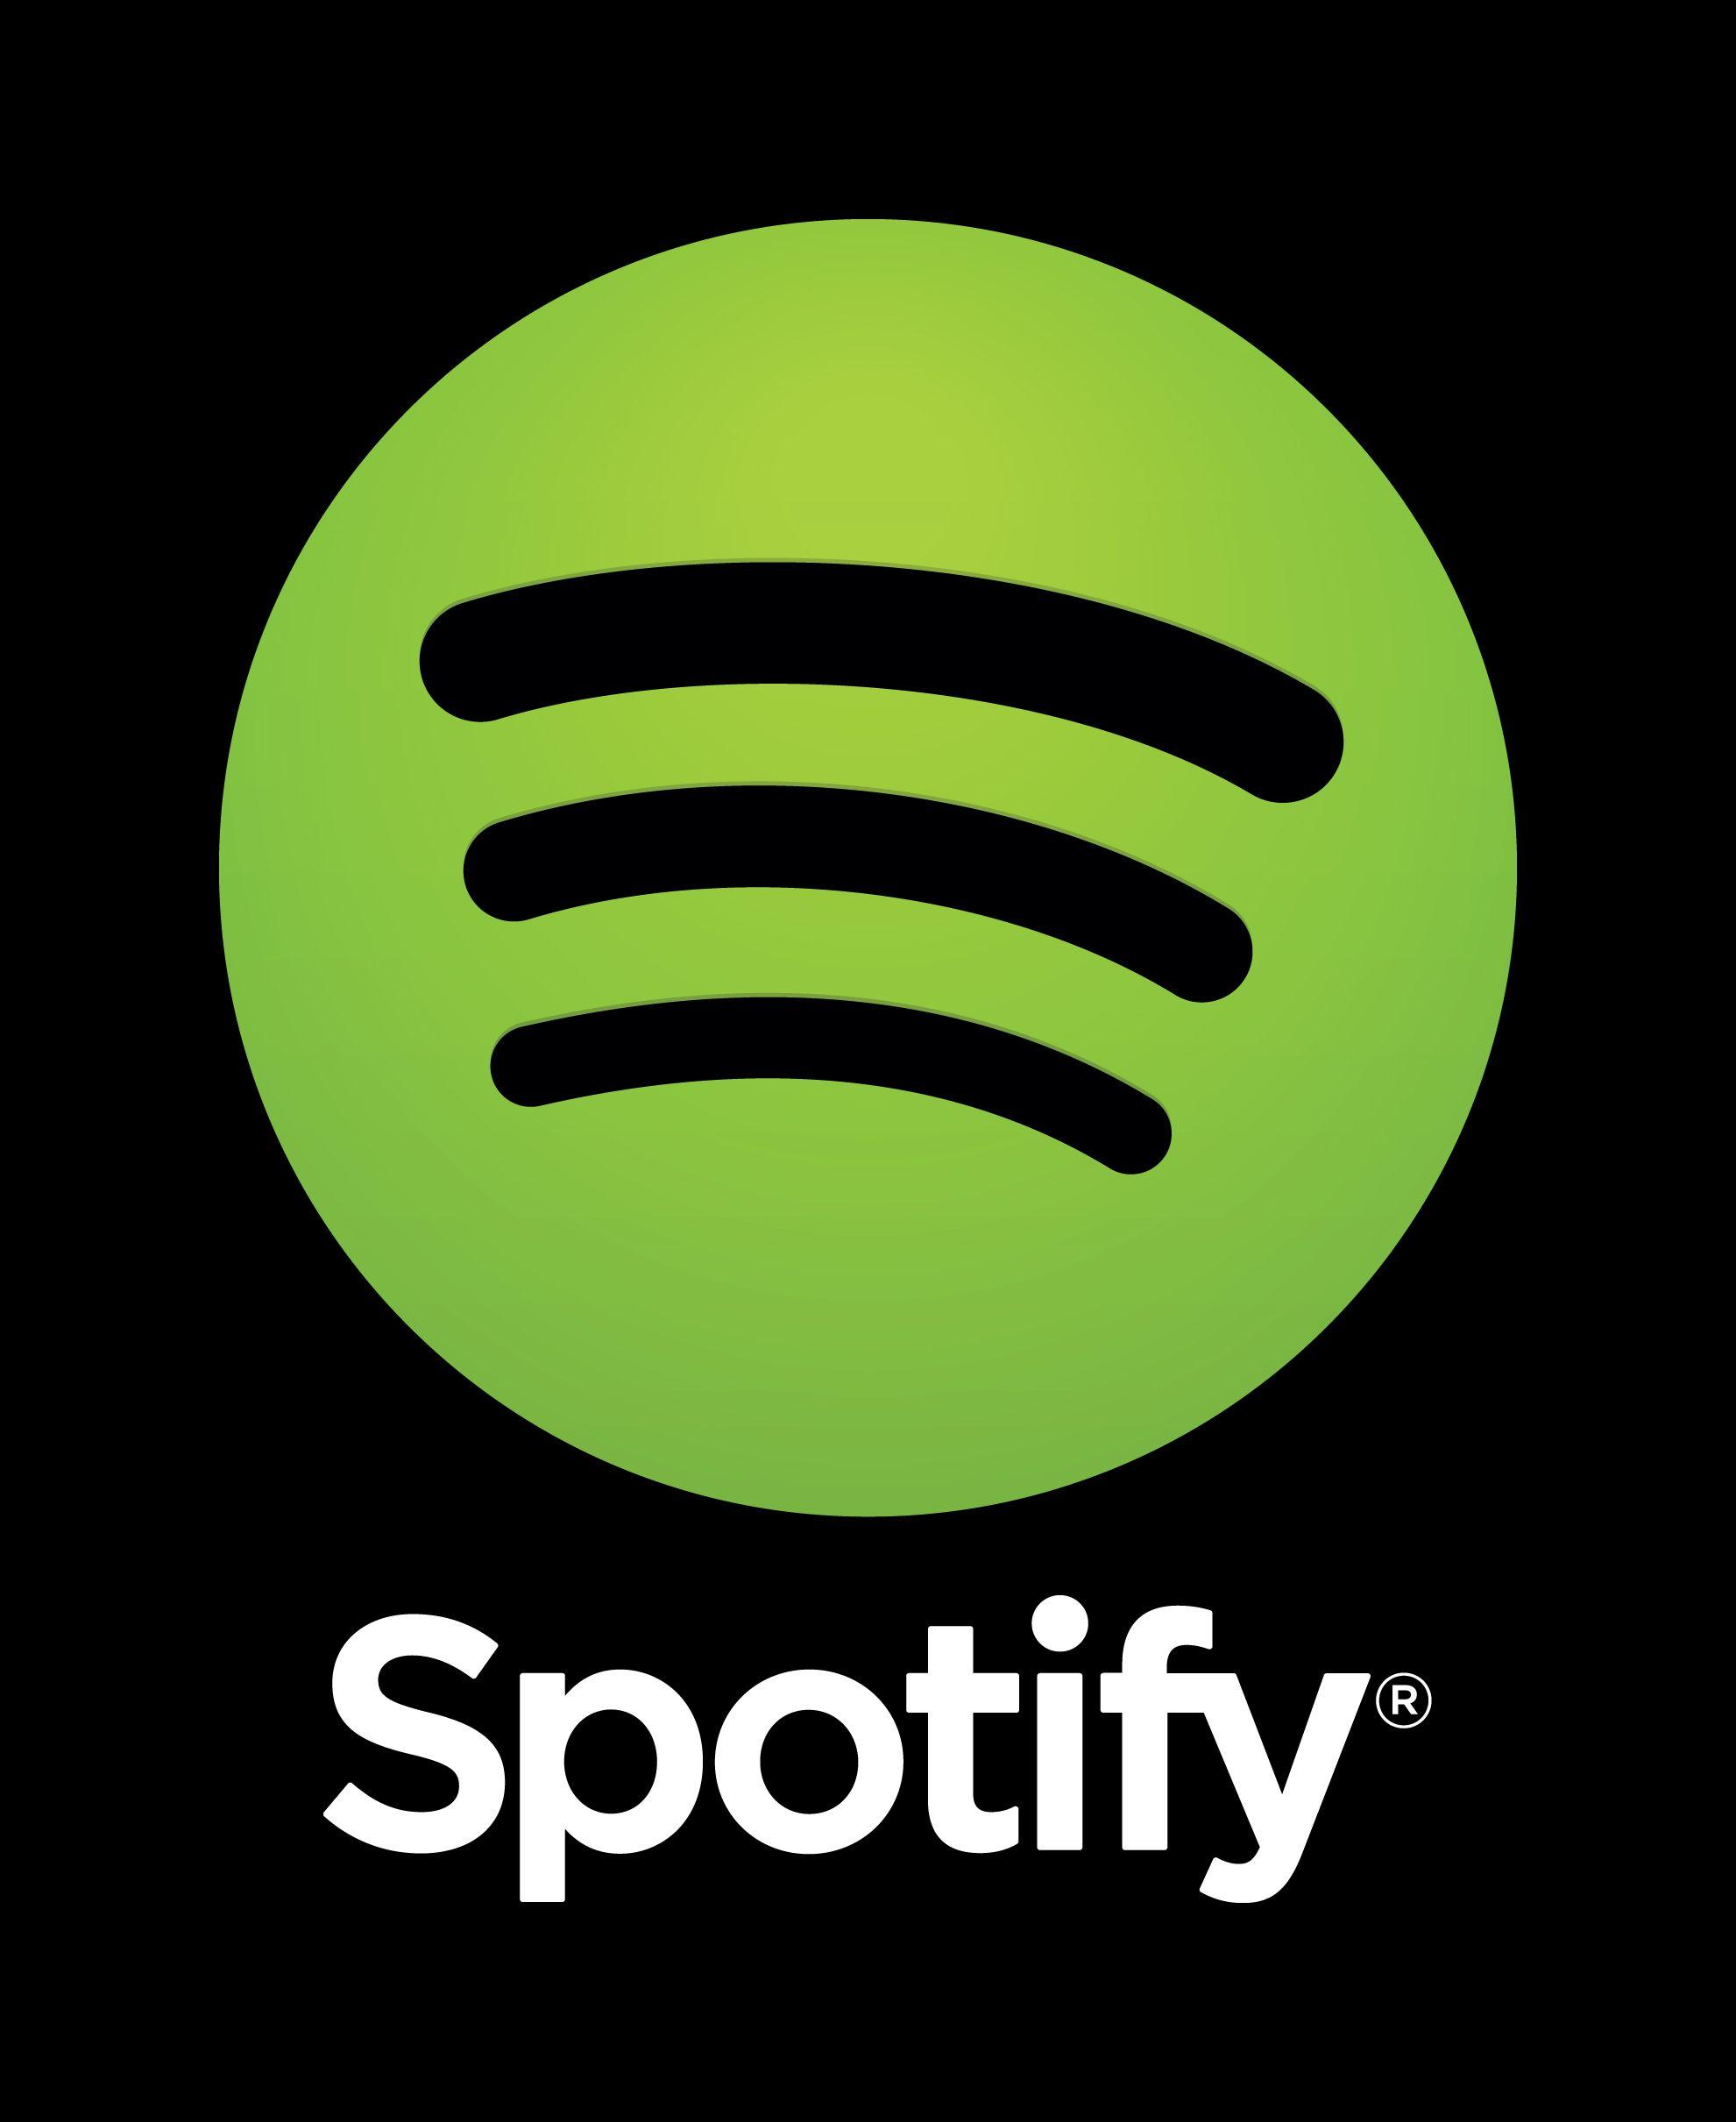 Get It On Spotify Logo - File:Spotify logo vertical black.jpg - Wikimedia Commons